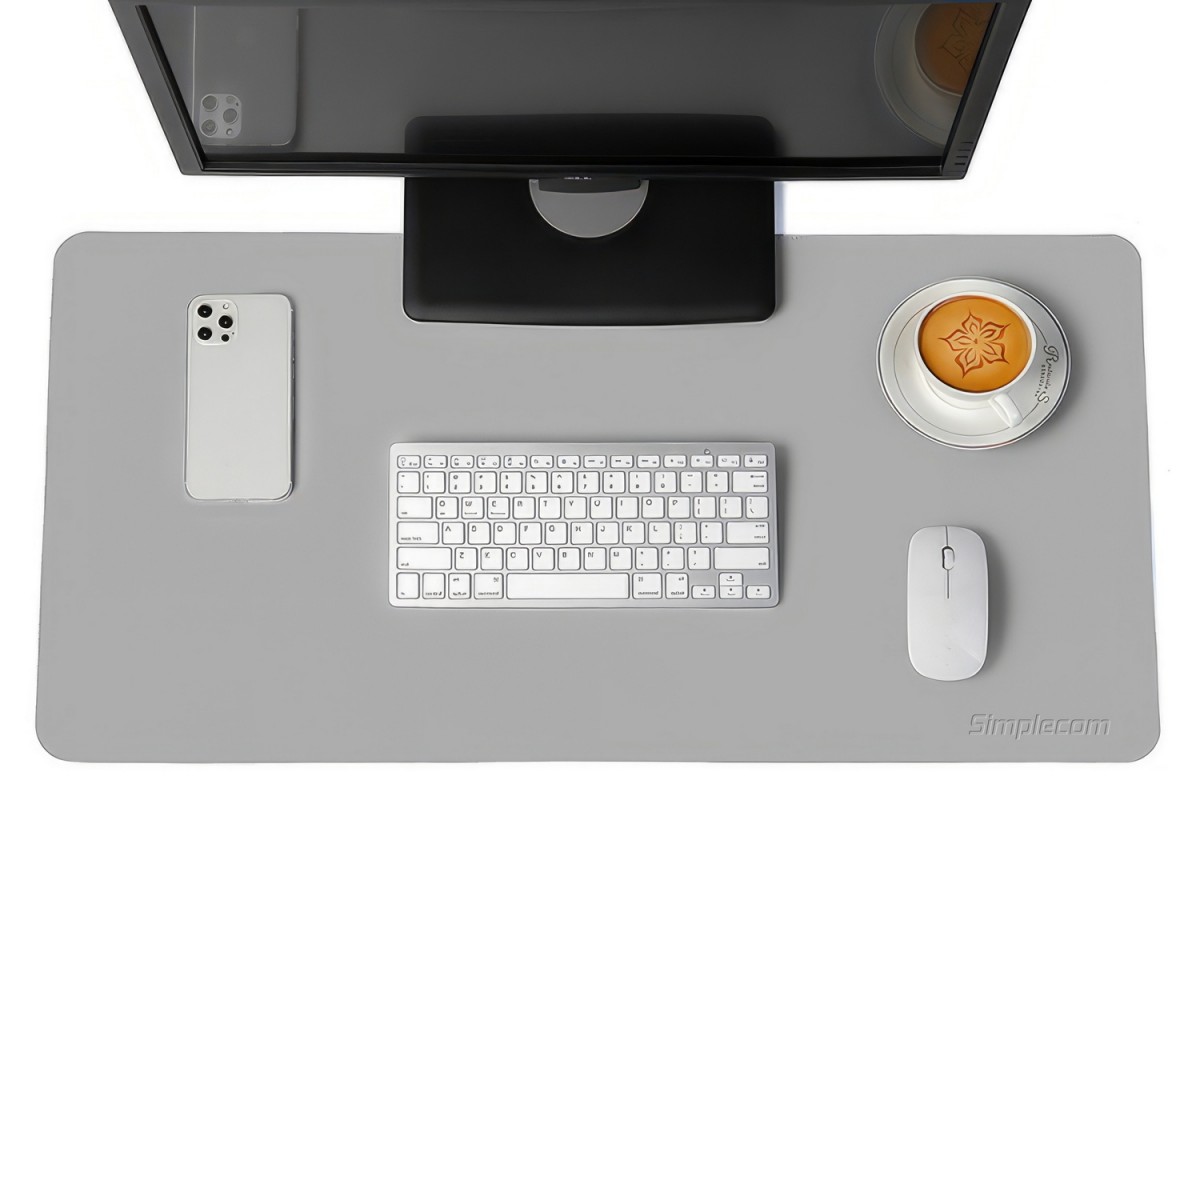  Desk Mouse Pad Non-Slip PU Leather 80x40cm - Grey  